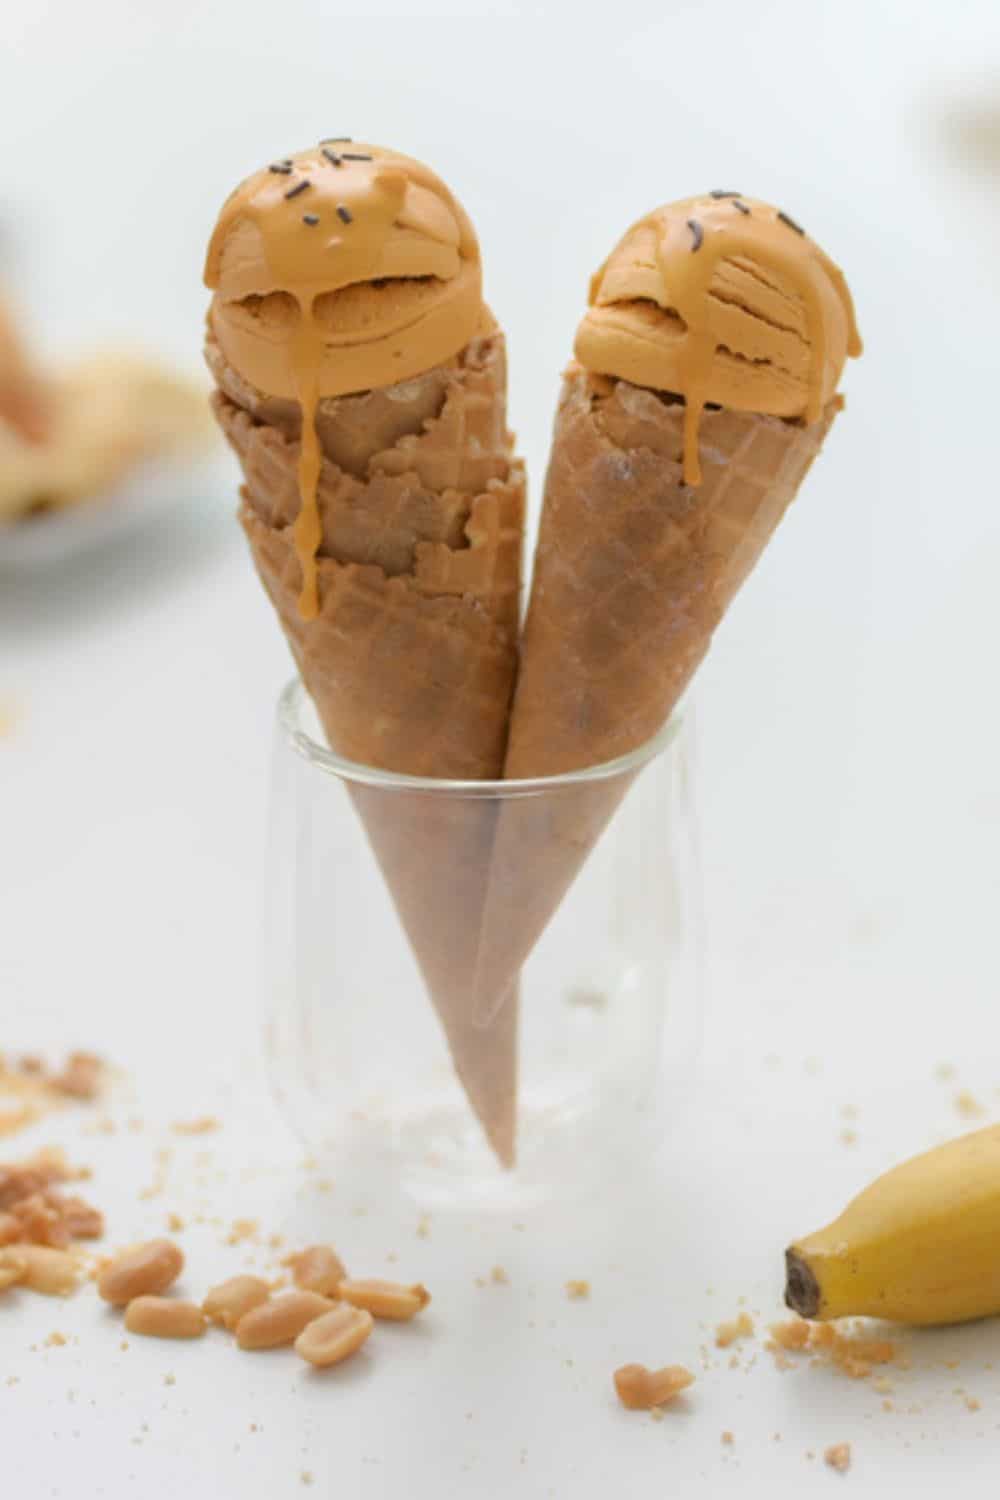 peanut butter ice cream topping on ice cream cones